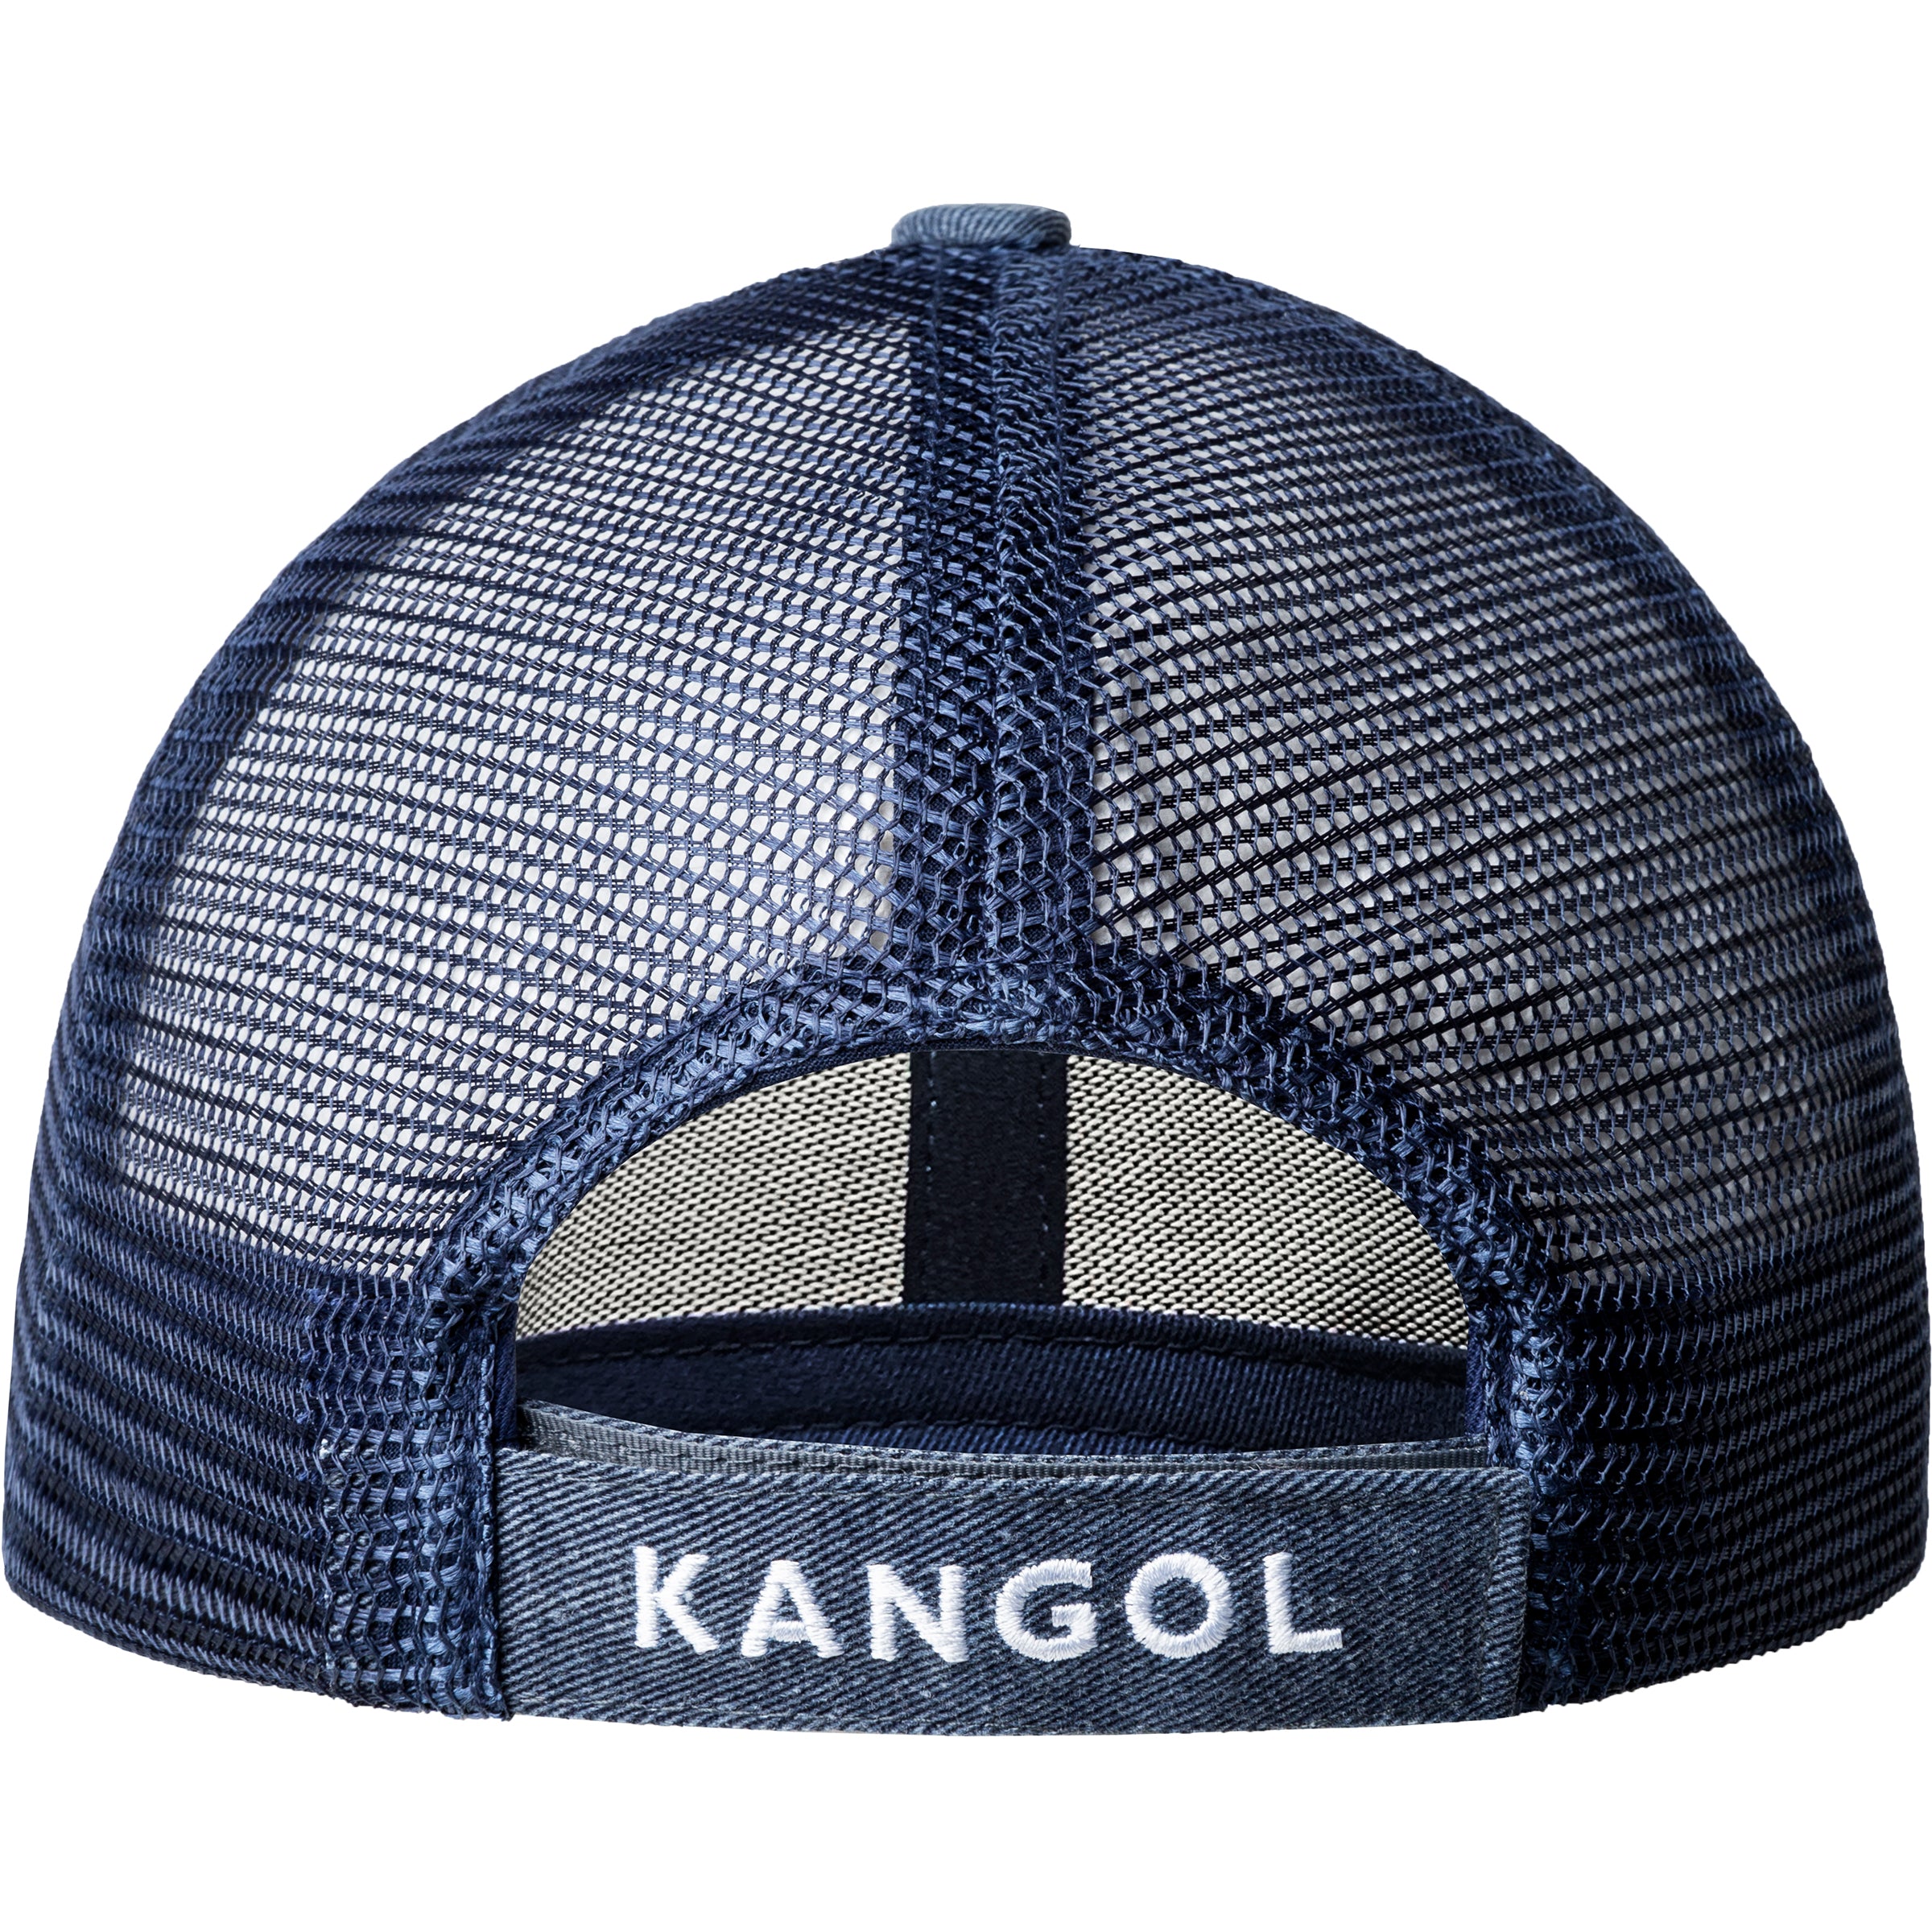 Kangol Trucker Hat - Distressed Cotton Mesh Baseball